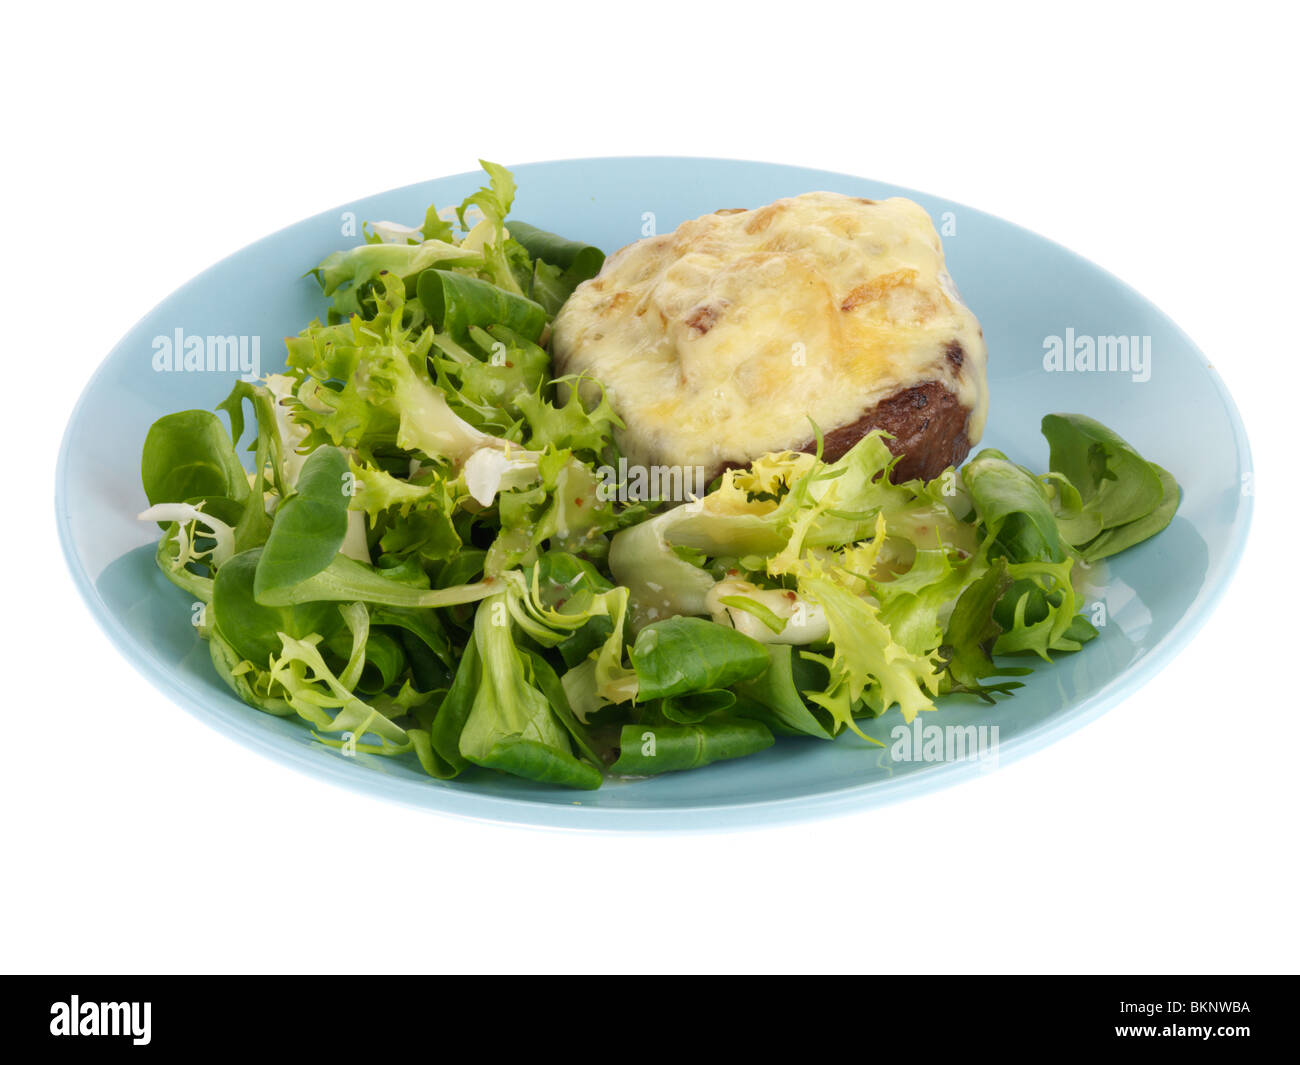 Hamburger Patty with Salad Stock Photo